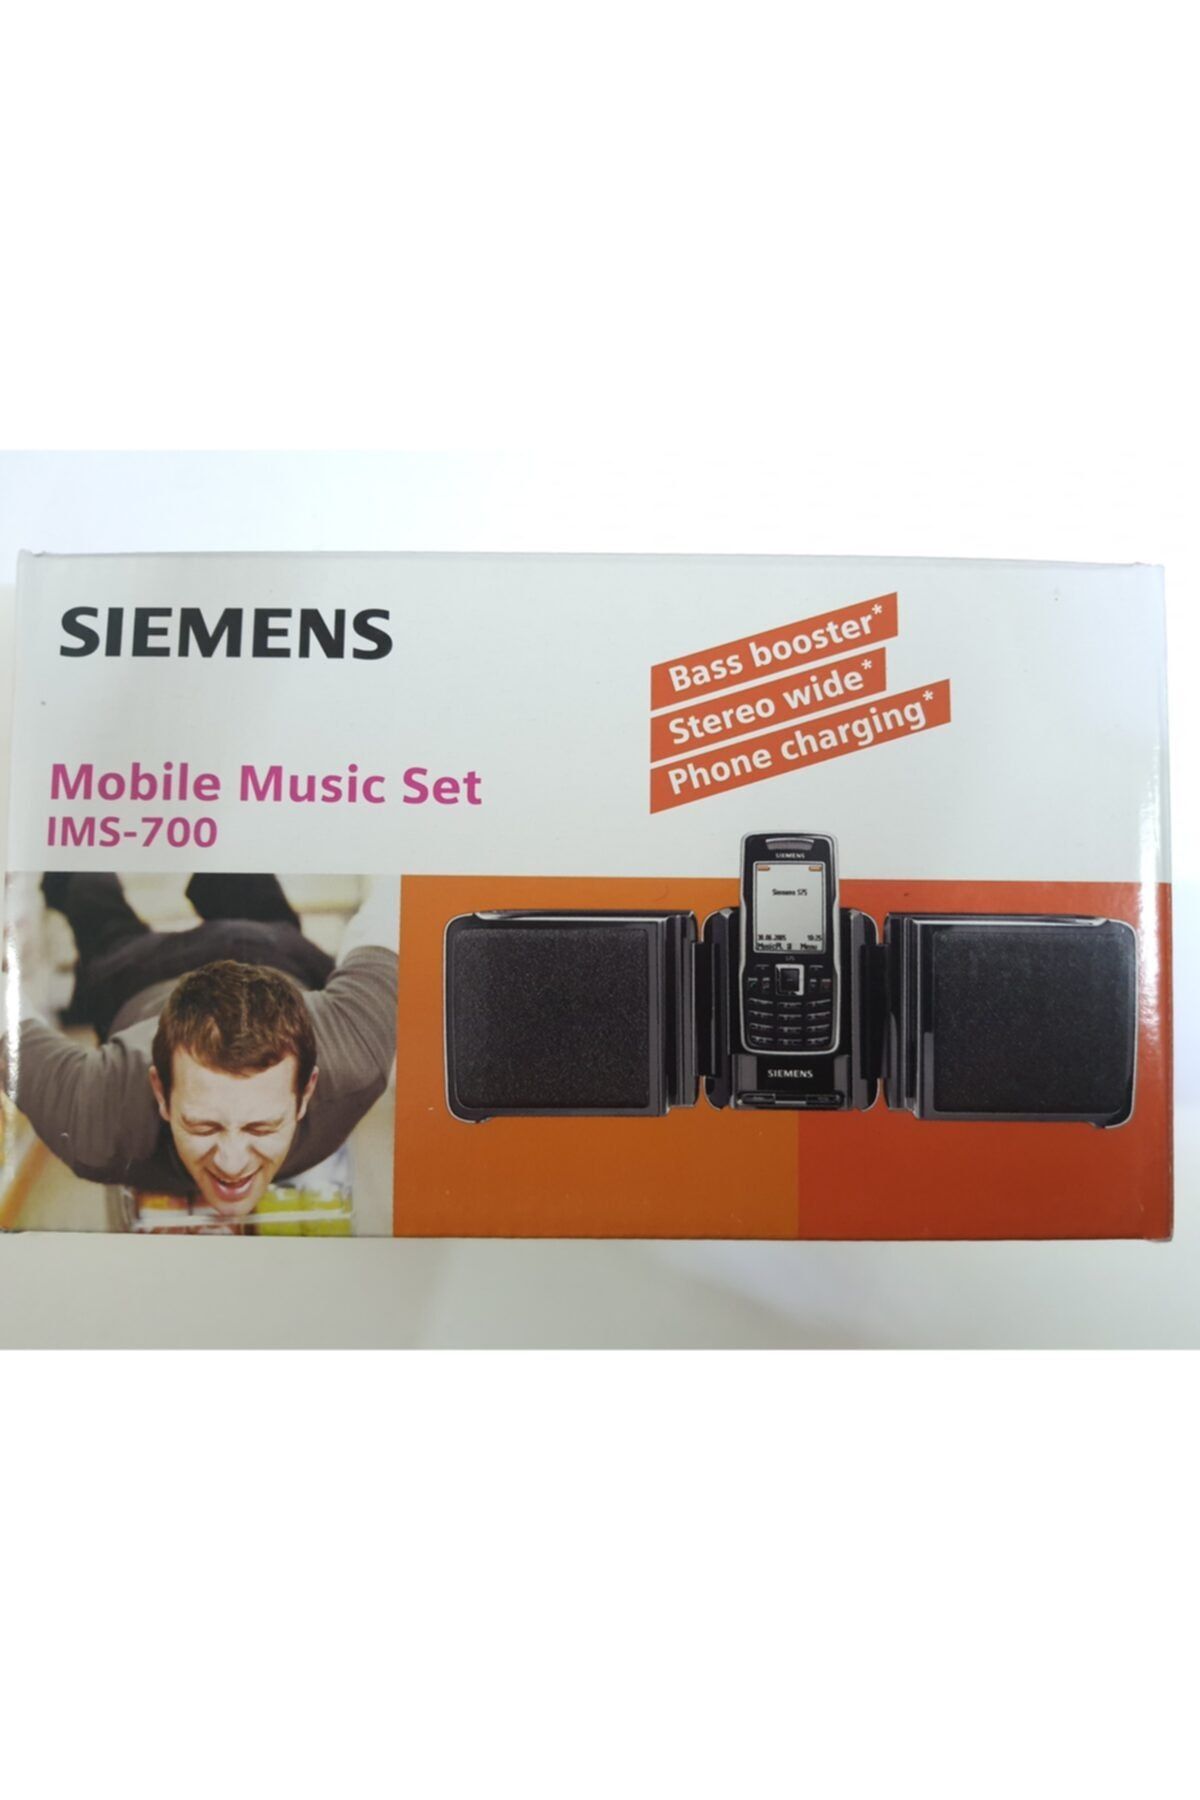 Siemens Mobile Music Set Original Ims-700